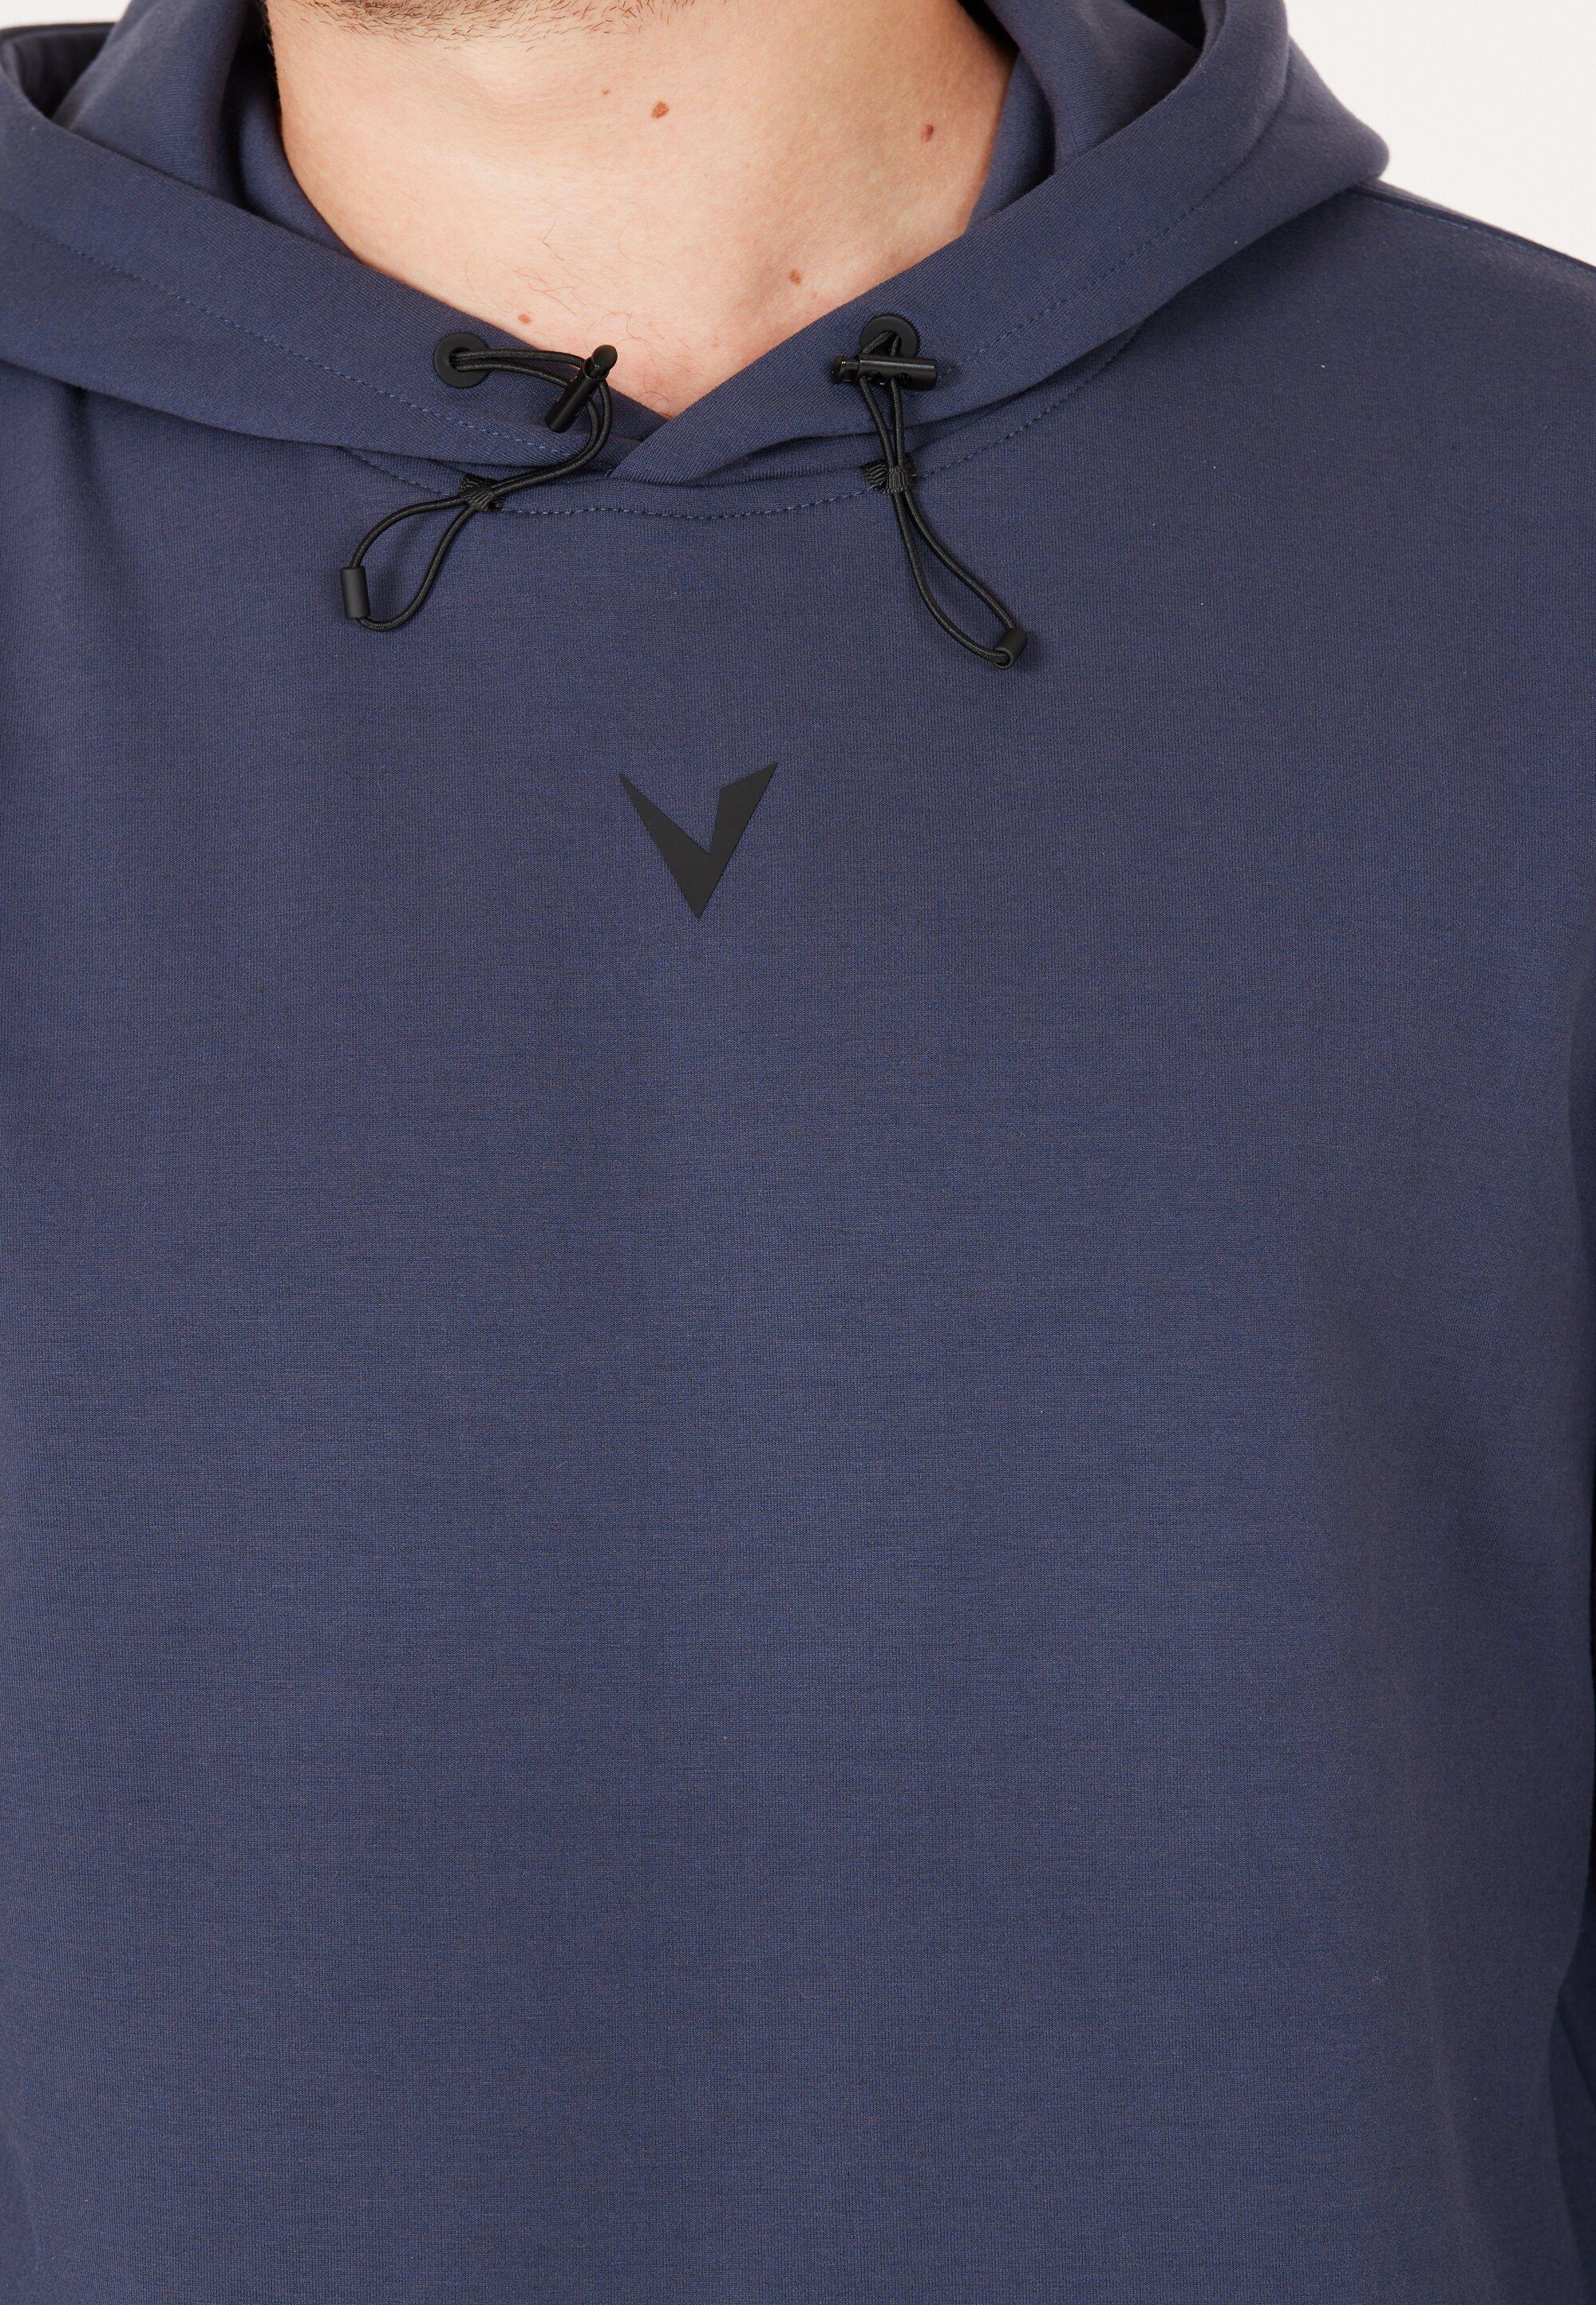 Virtus Sweatshirt Taro mit kuscheliger, einstellbarer dunkelblau Kapuze